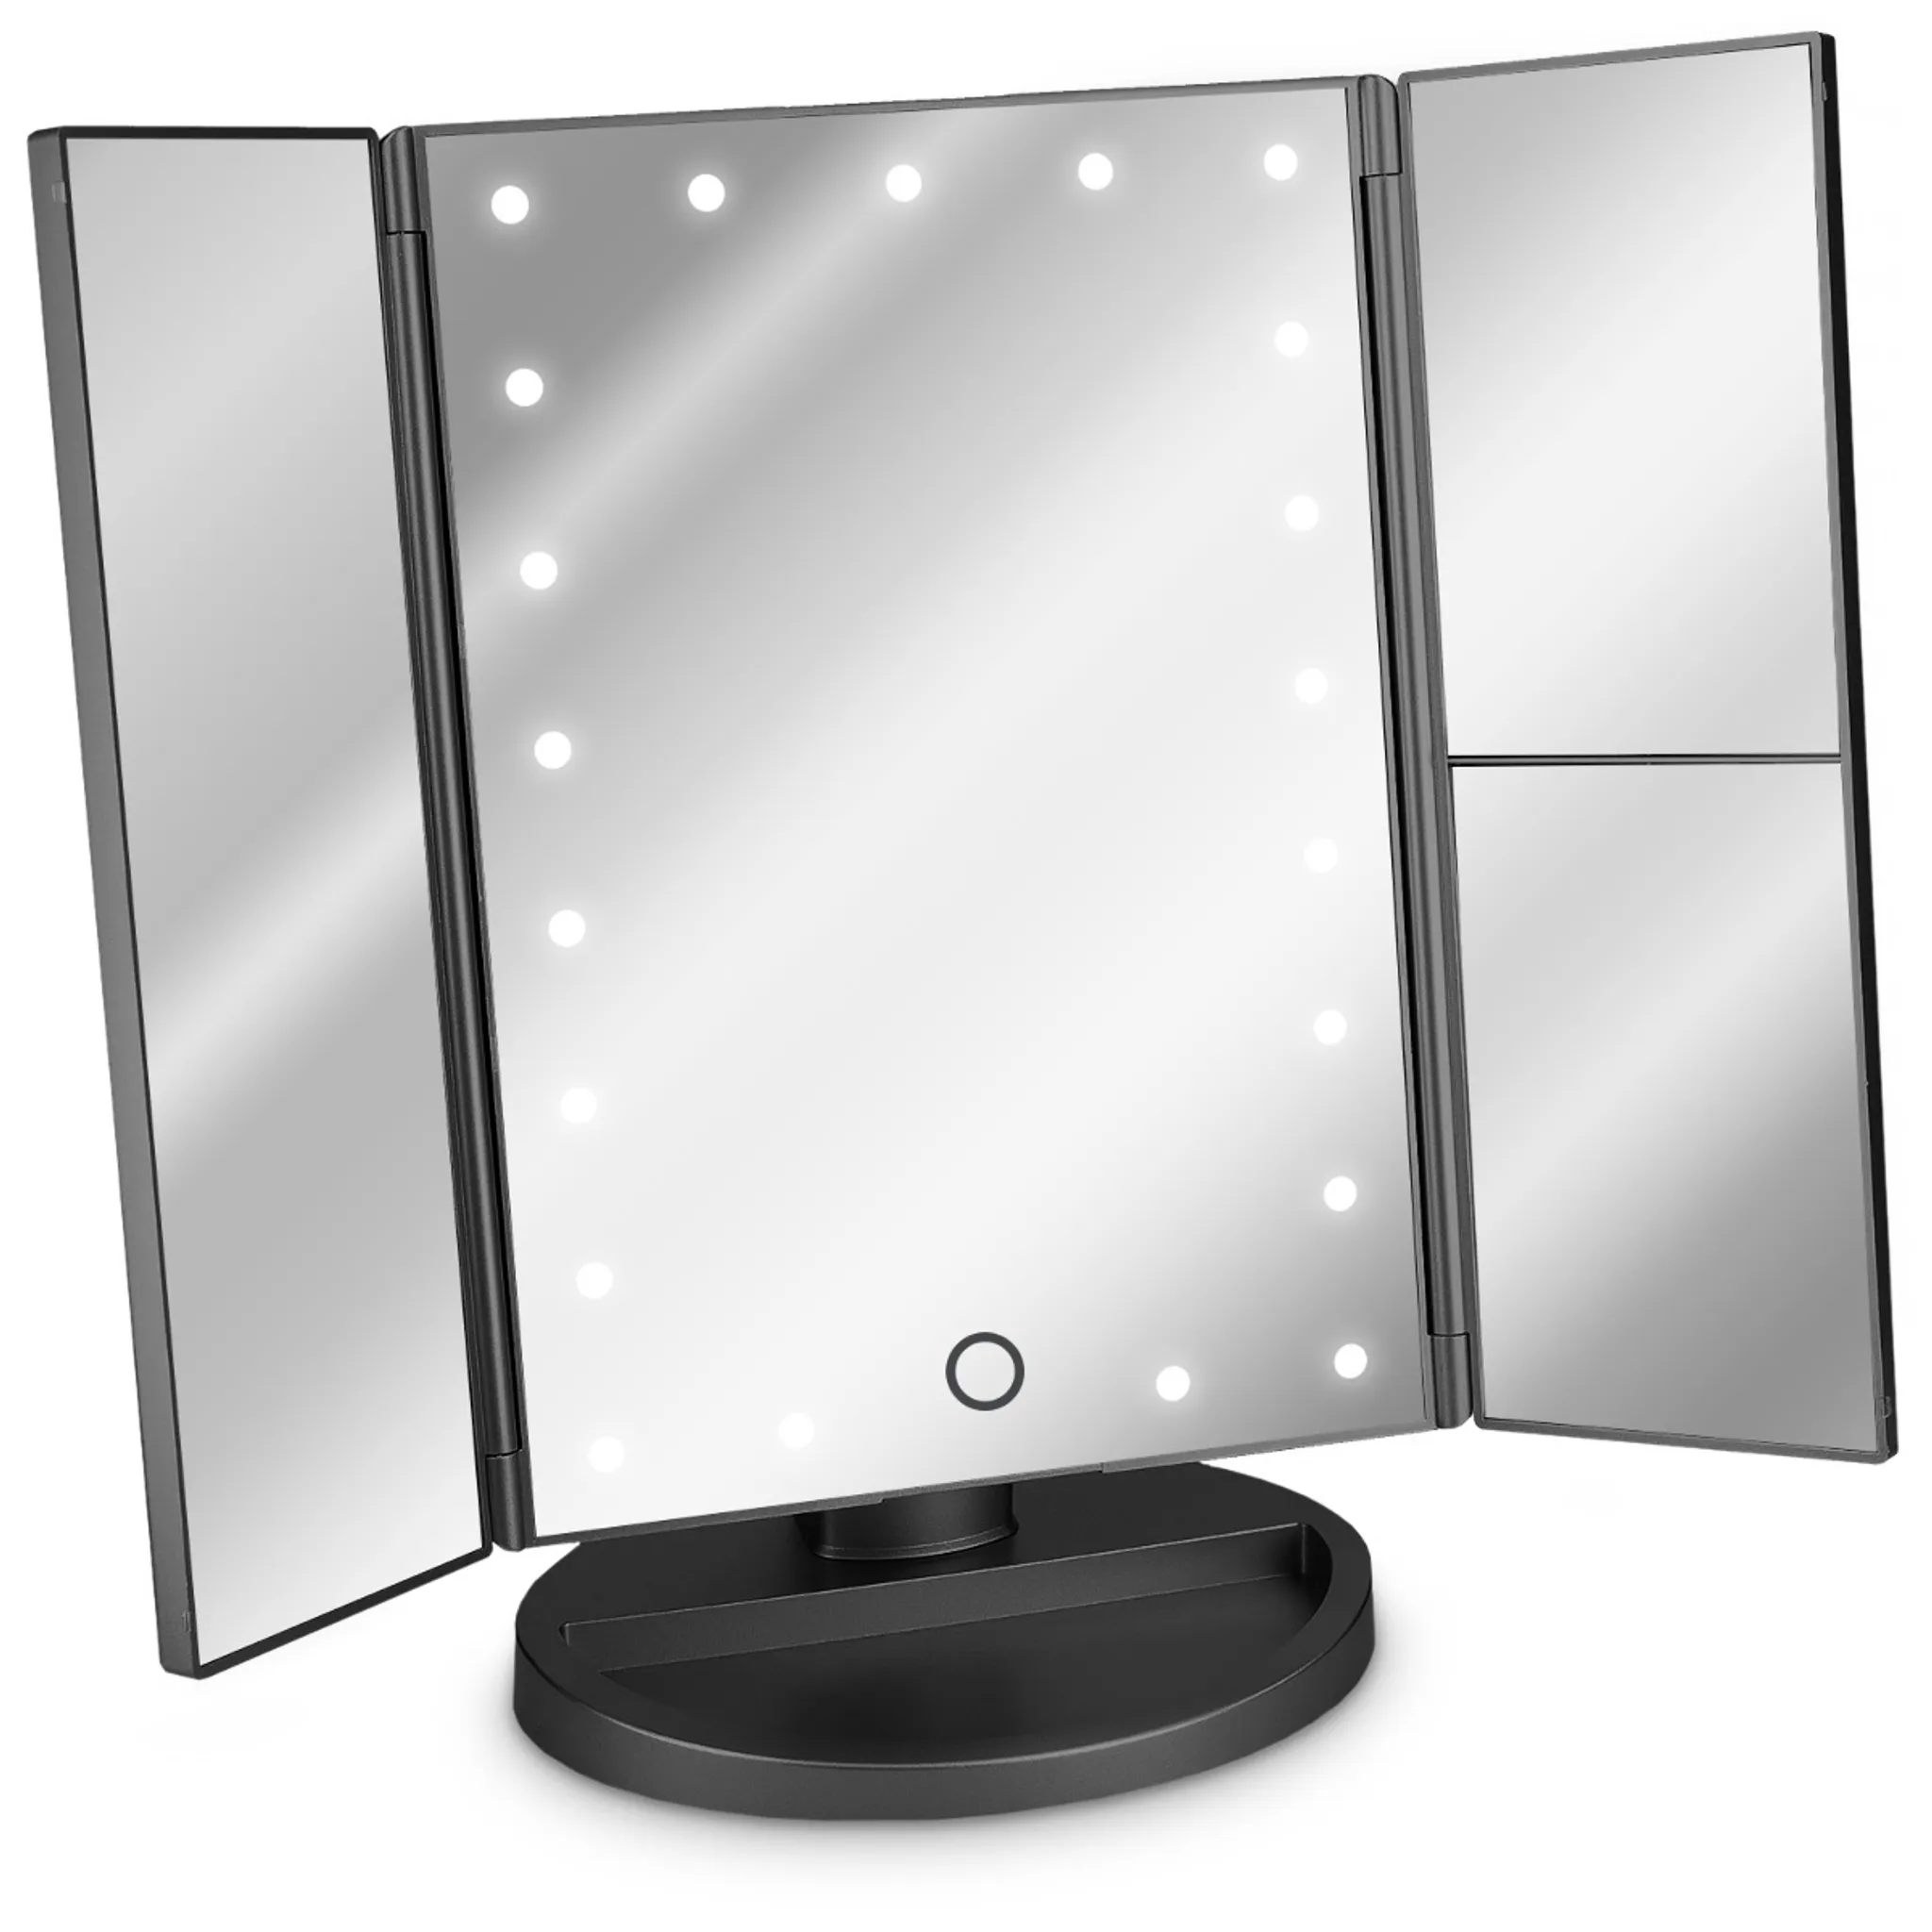 Navaris Kosmetikspiegel mit LED Beleuchtung 